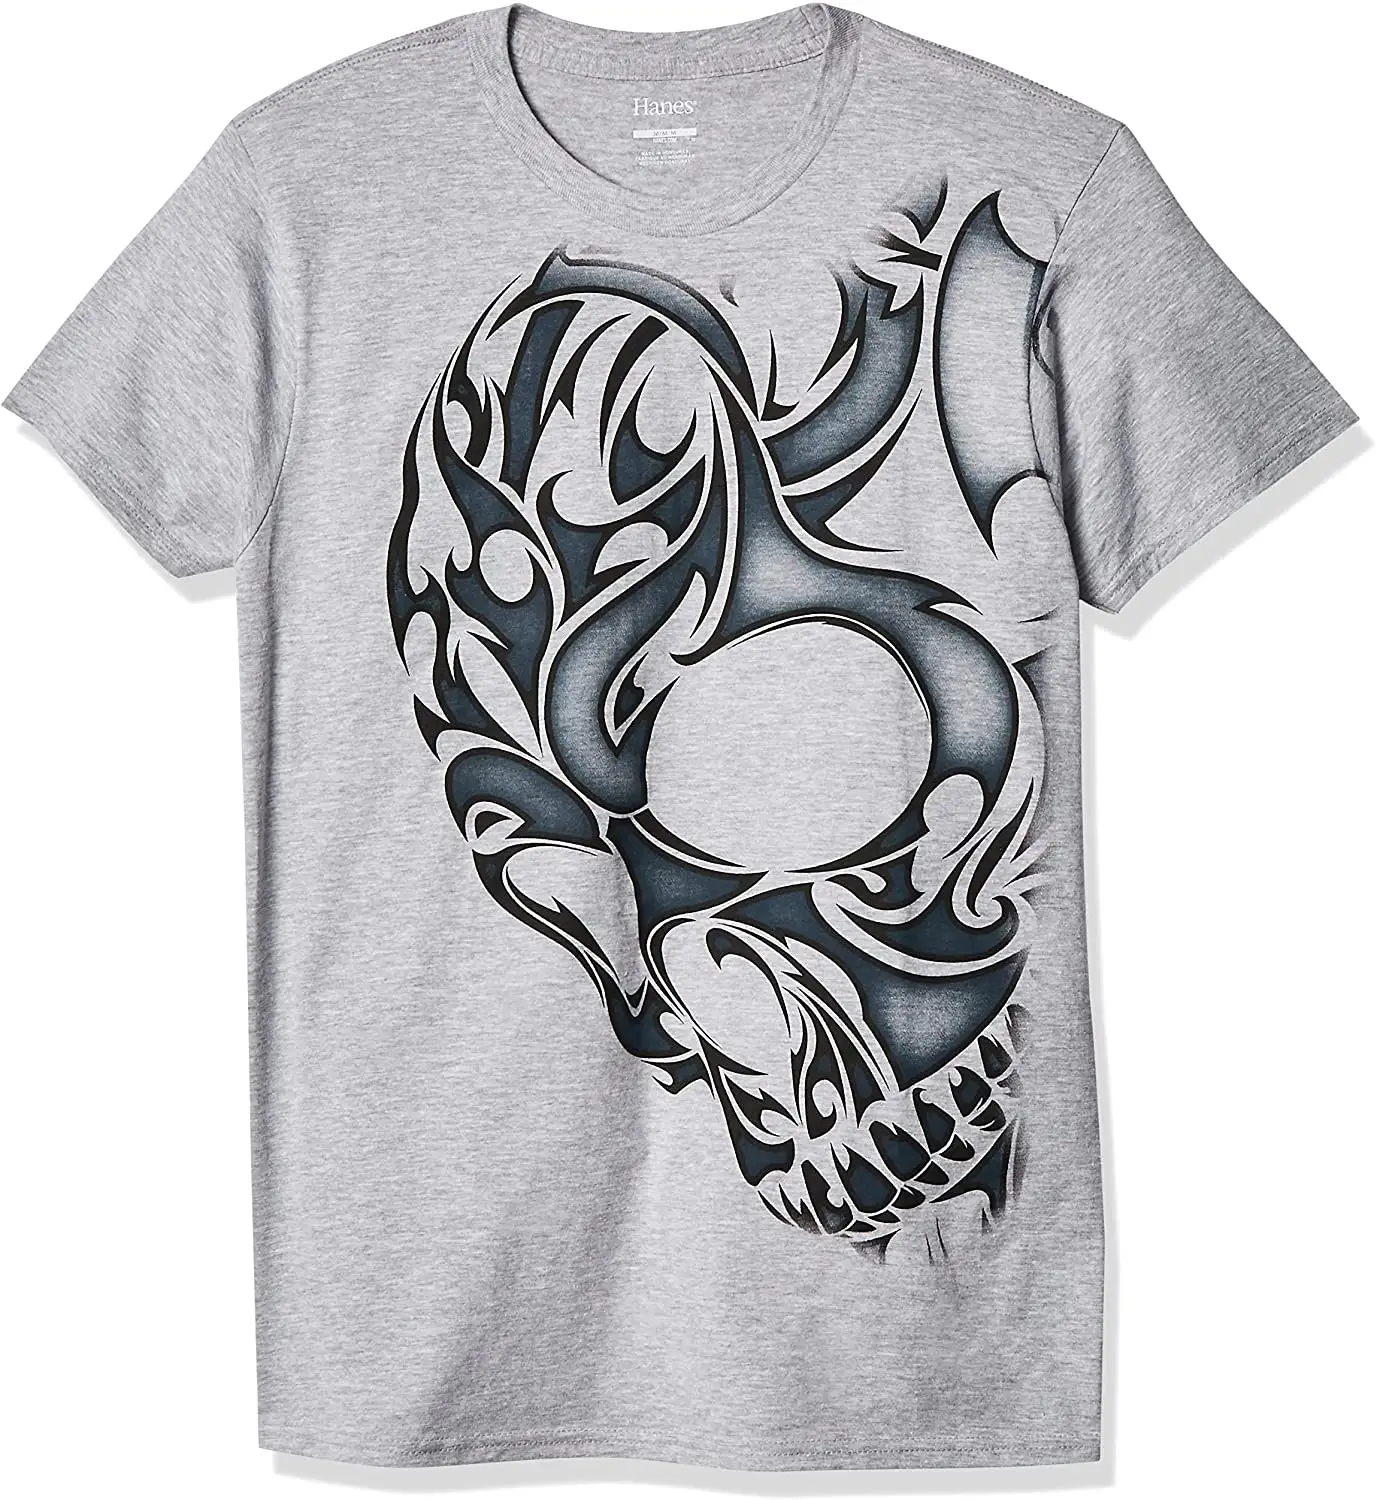 100% cotton T-shirt men's shirts Wild Tiger Print T-shirt Wholesale Price Solid Crewneck T Shirt Custom Printing 100% Premium